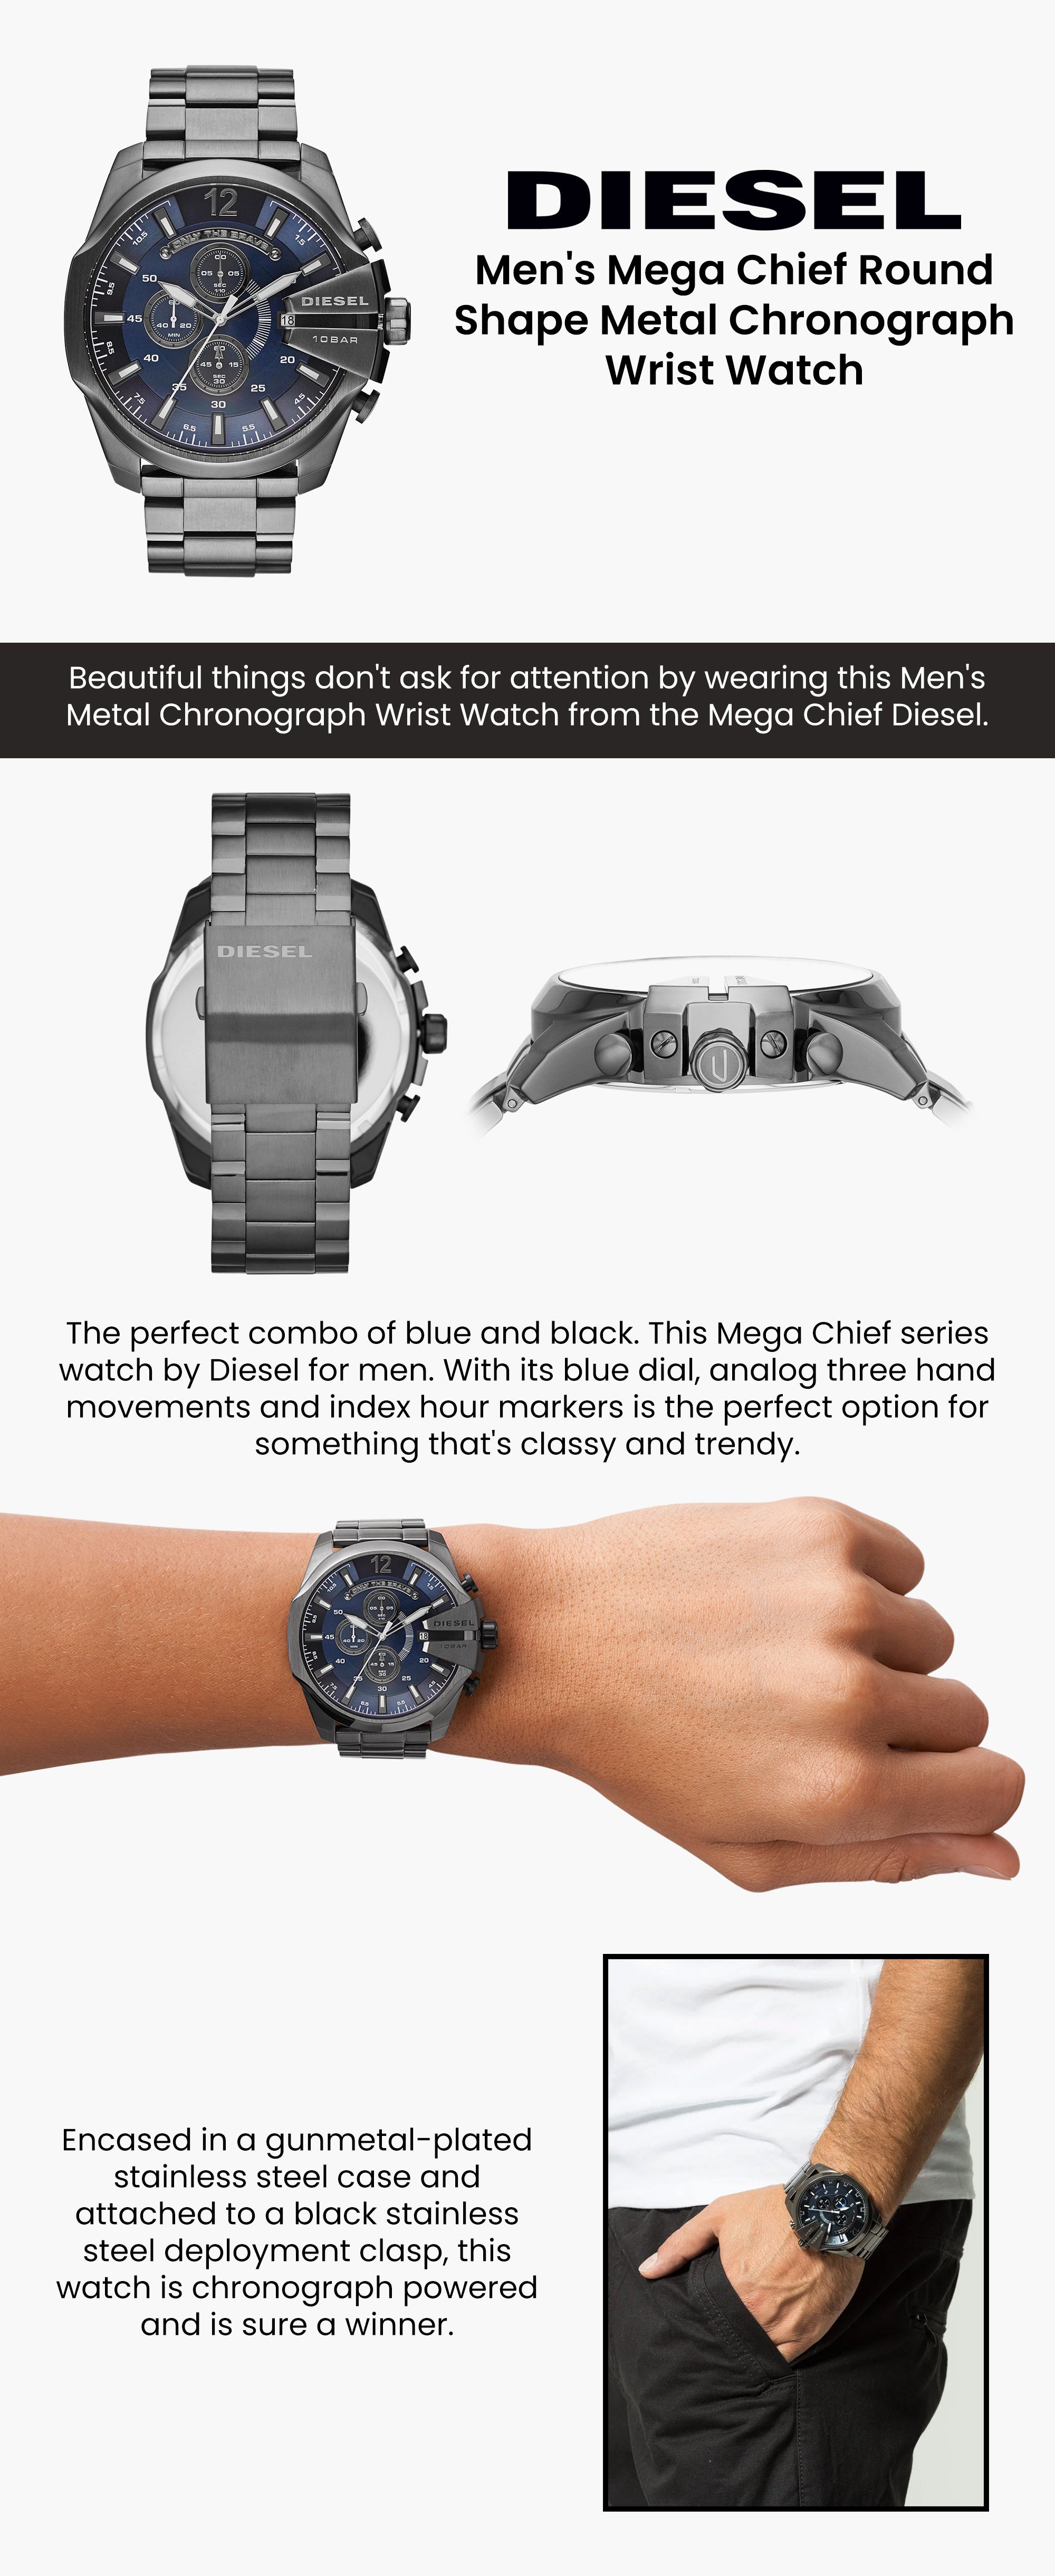 DIESEL Men\'s Mega Chief Round Shape Stainless Steel Chronograph Wrist Watch  51 mm - Grey - DZ4329 UAE | Dubai, Abu Dhabi